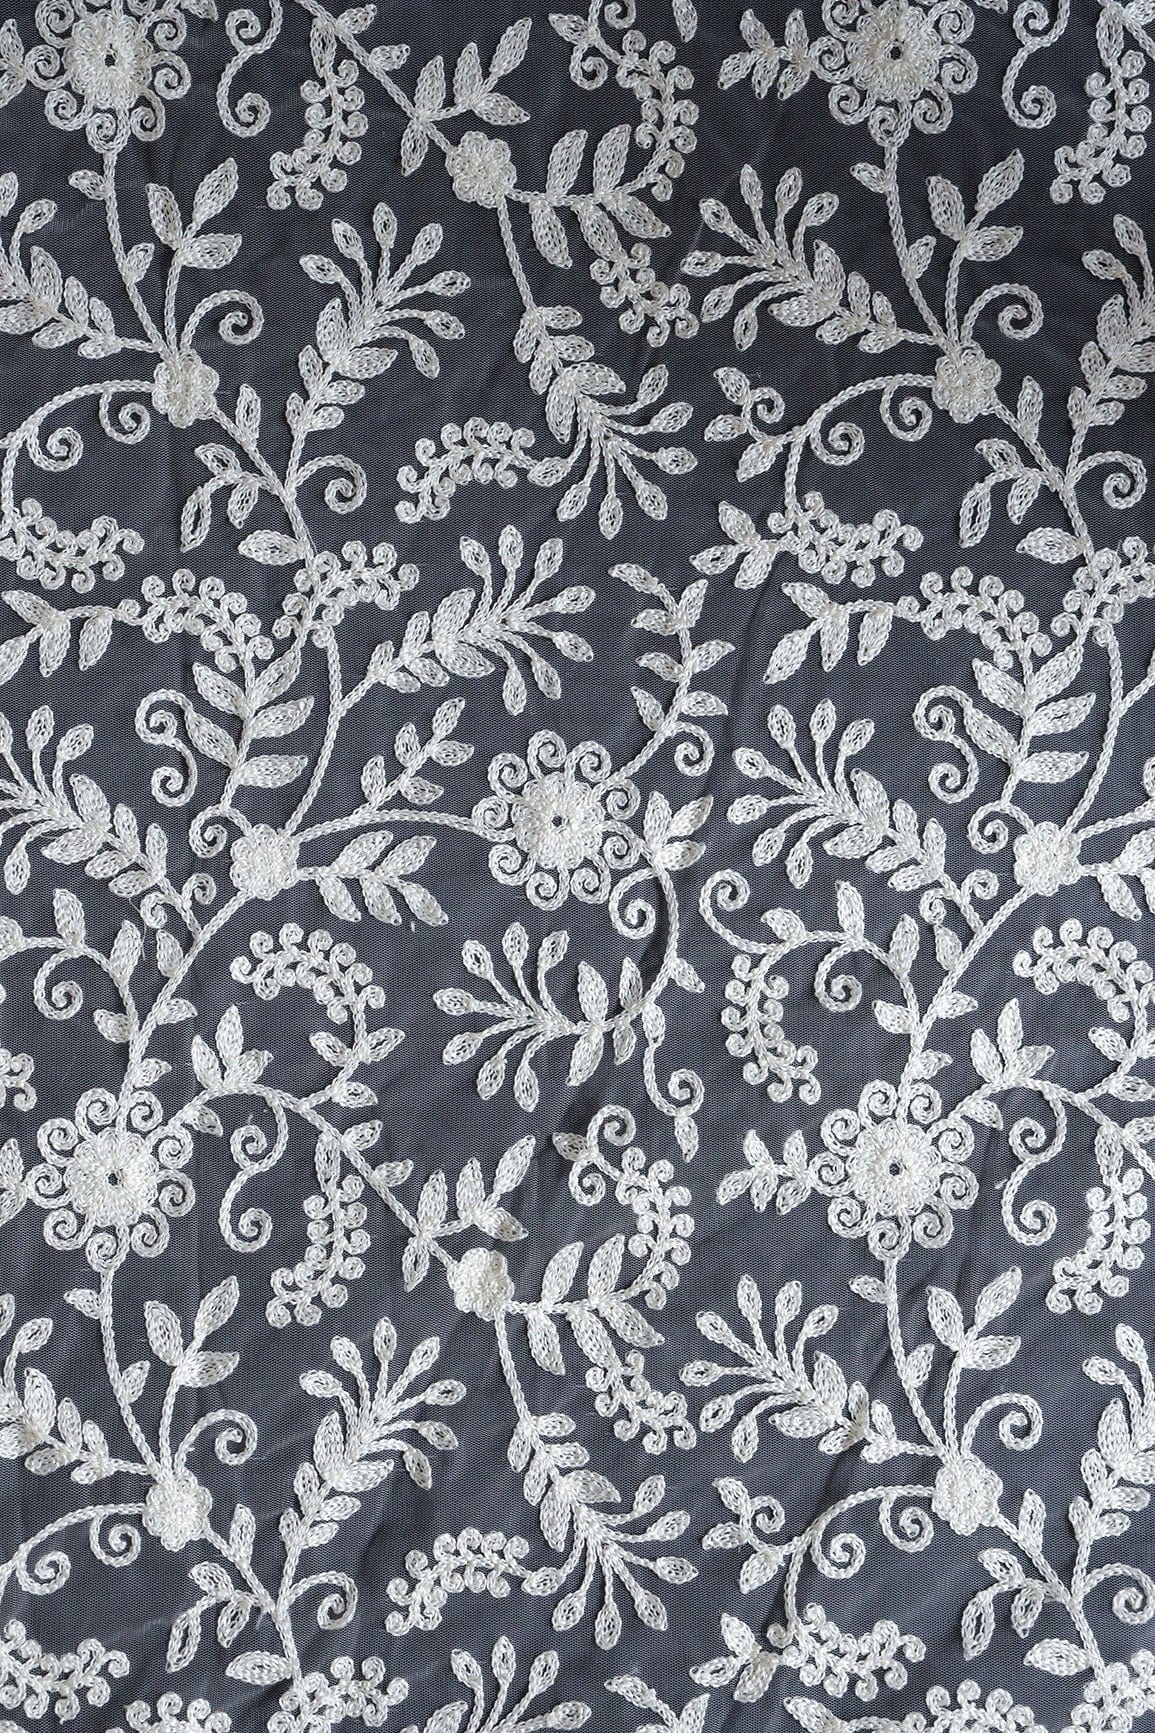 doeraa Embroidery Fabrics Cream Thread Beautiful Heavy Floral Embroidery Work On Light Grey Soft Net Fabric